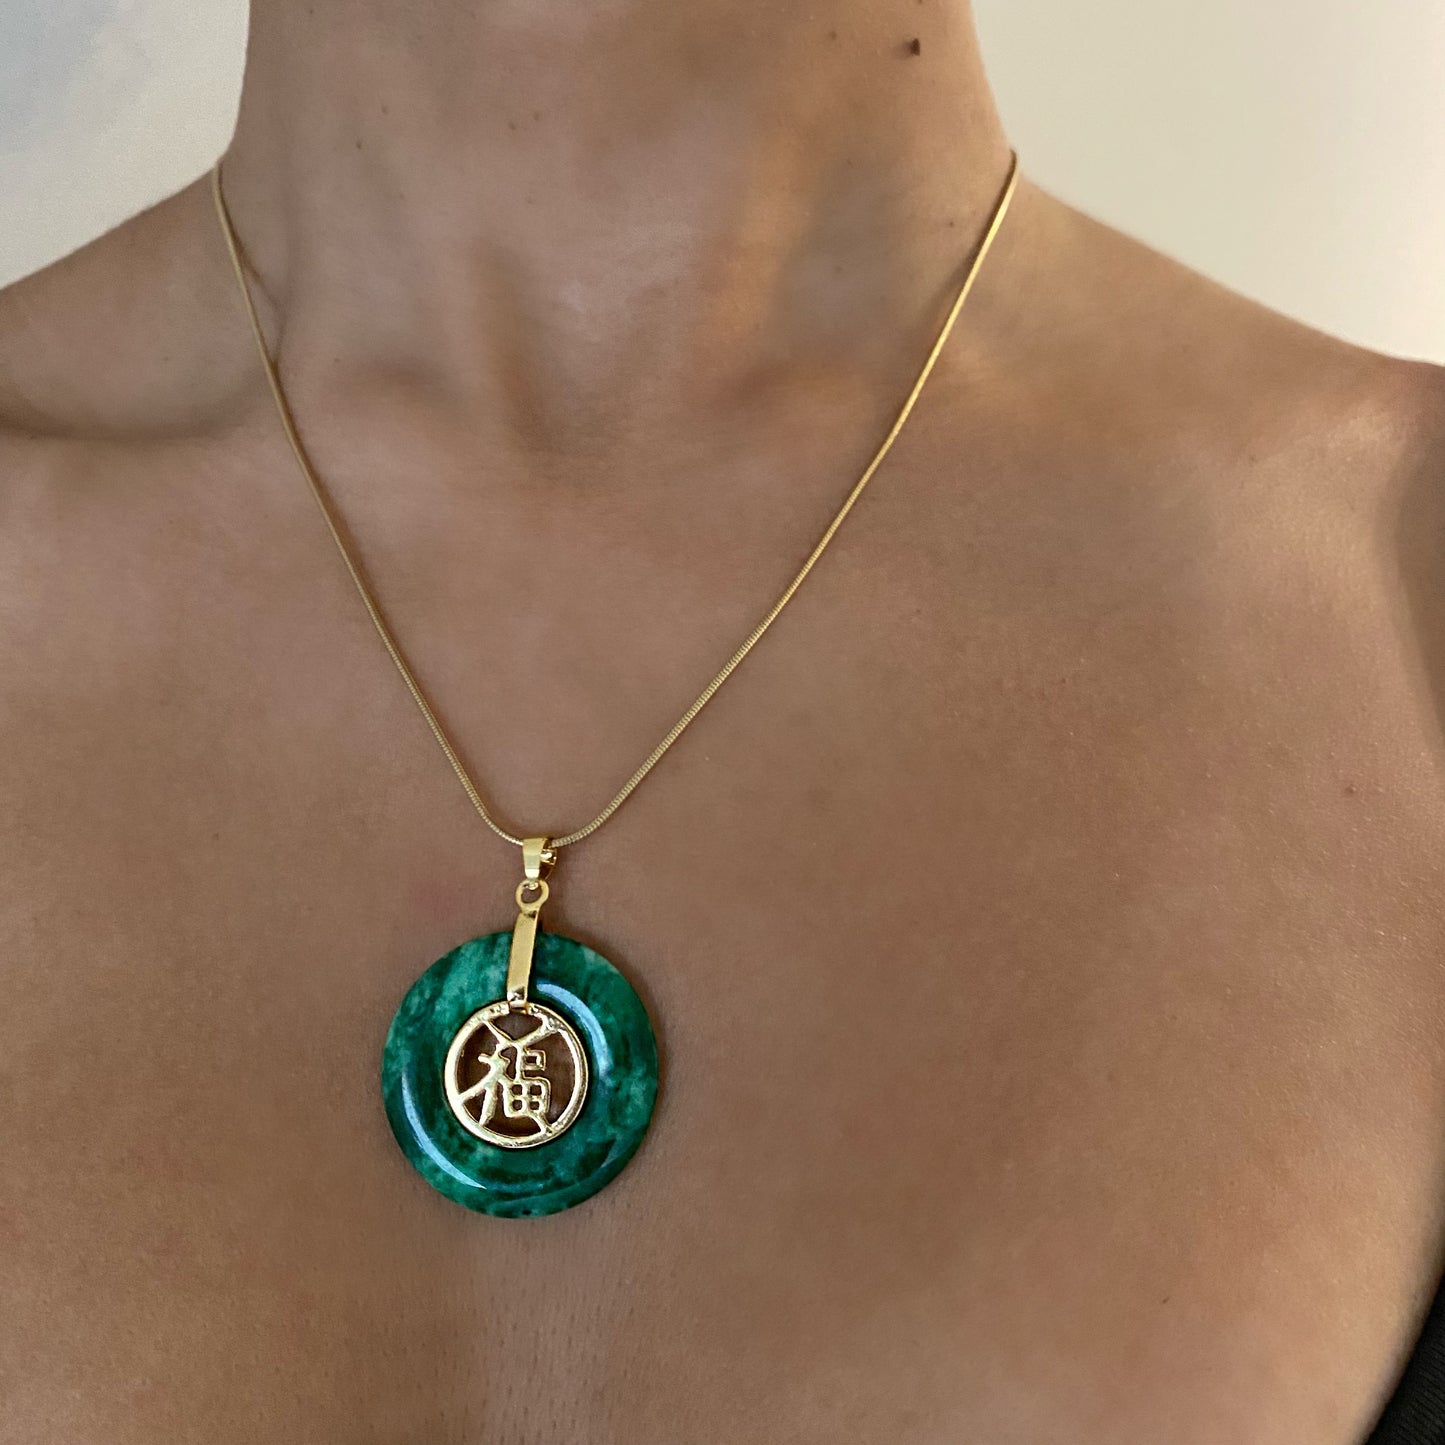 The "Peace" Jade Necklace